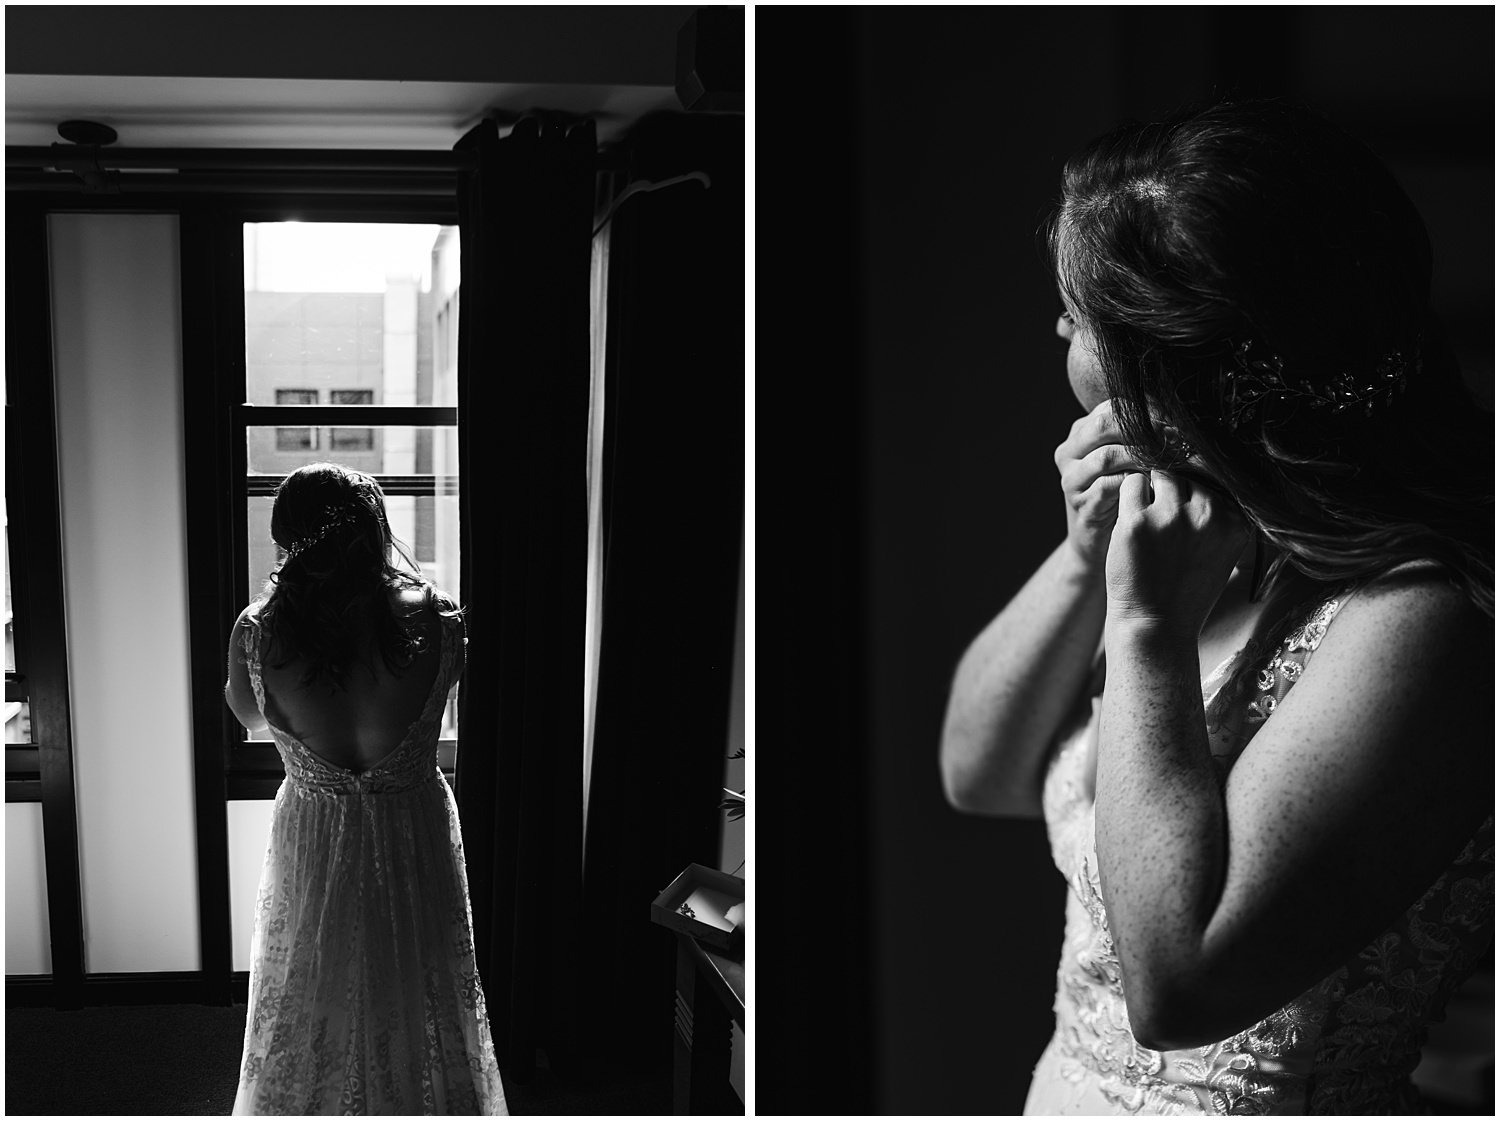 Chicago Athletic association hotel wedding photography - getting ready